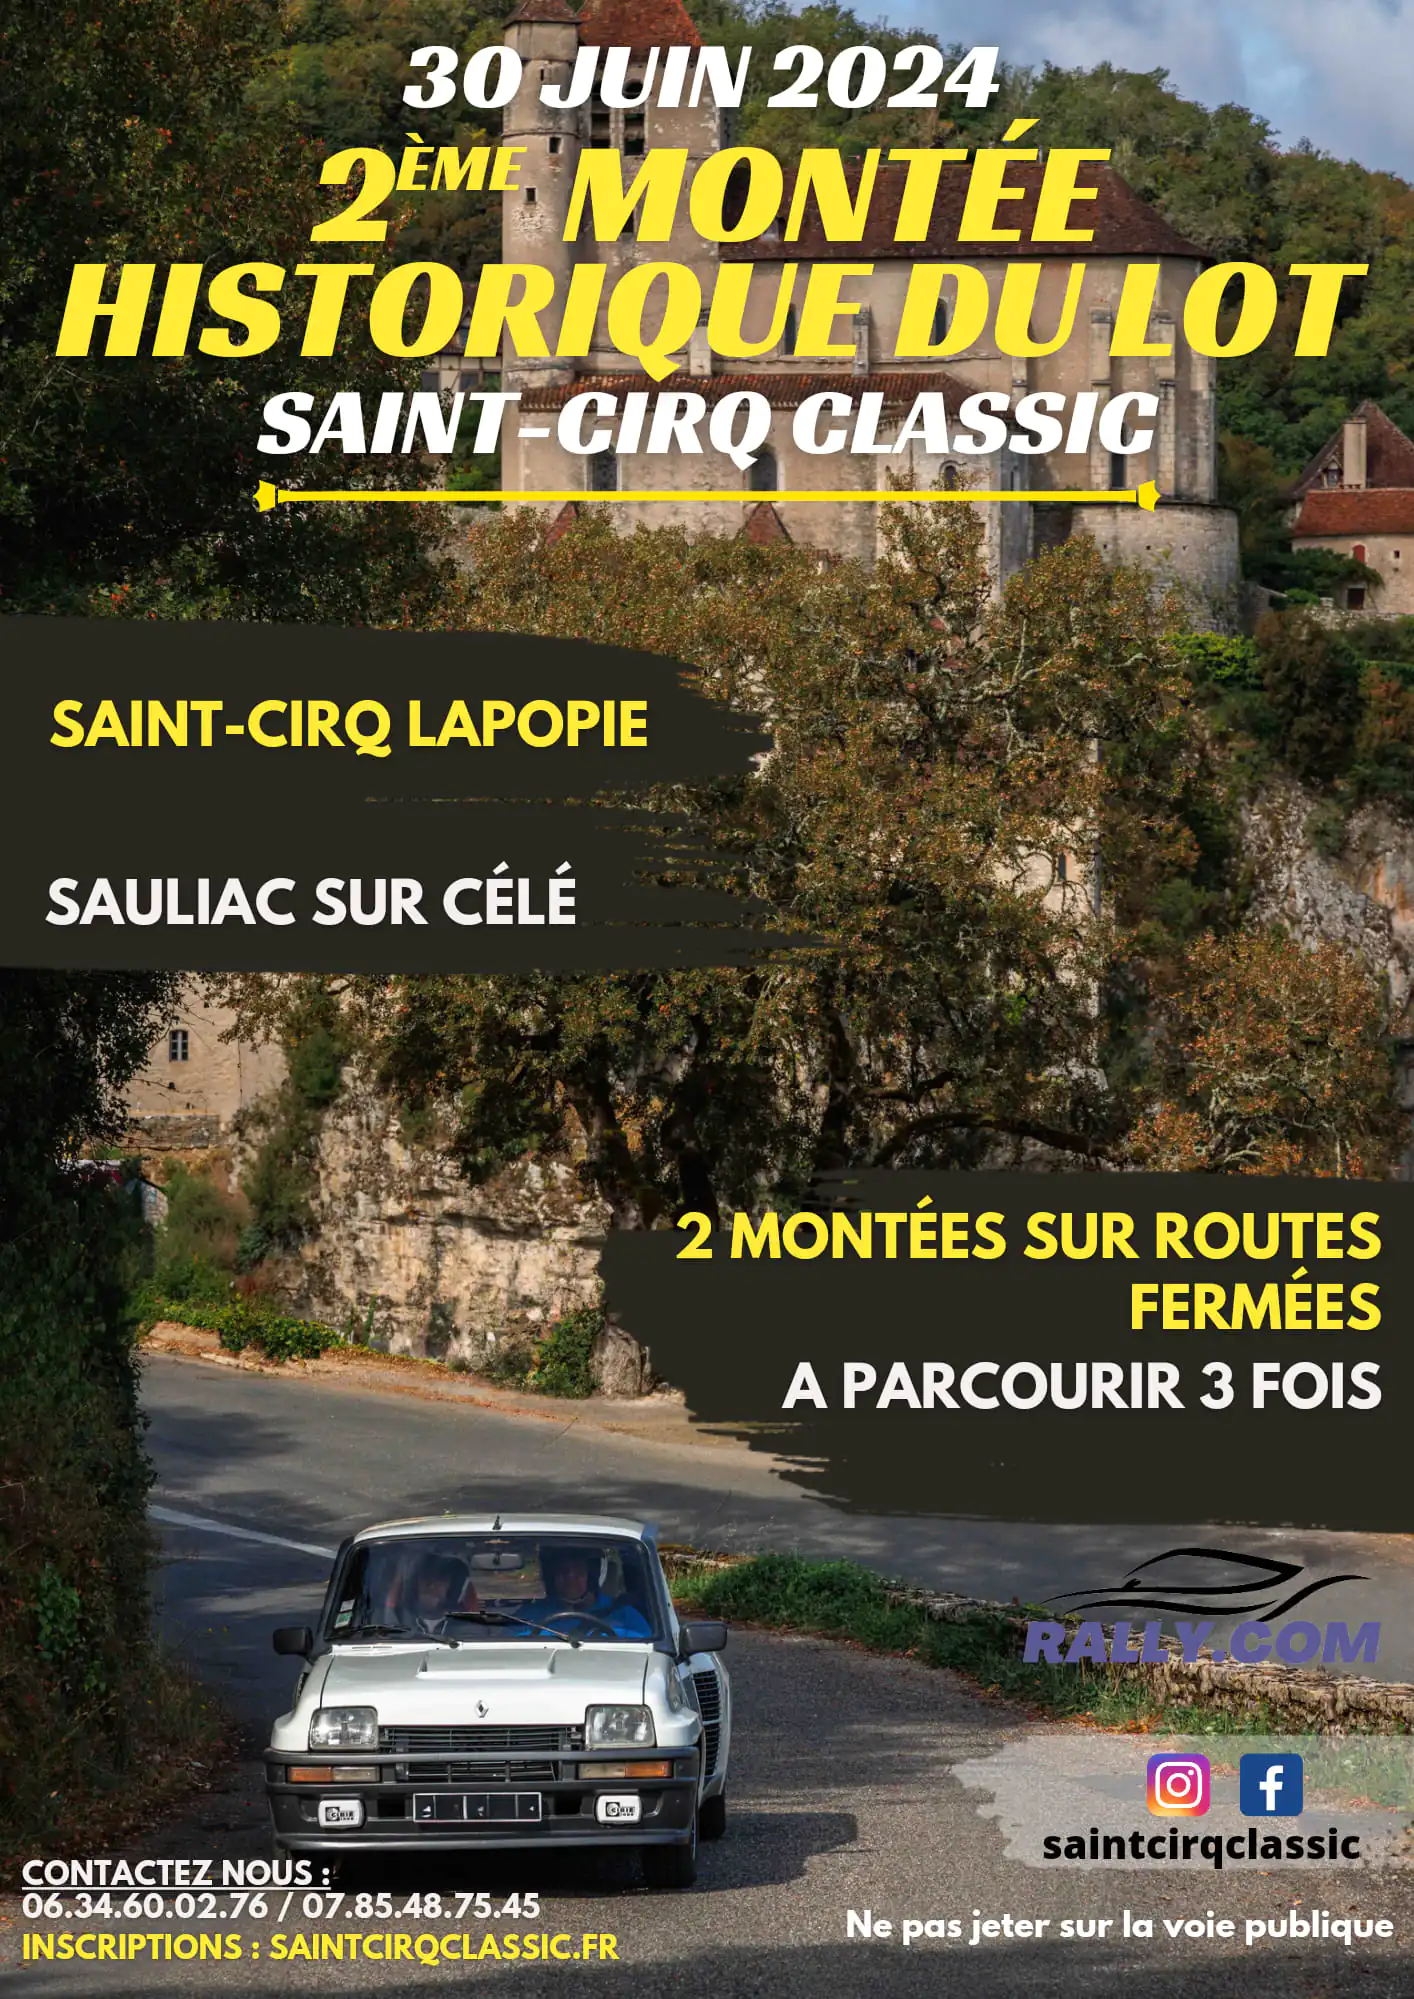 Saint-Cirq classic